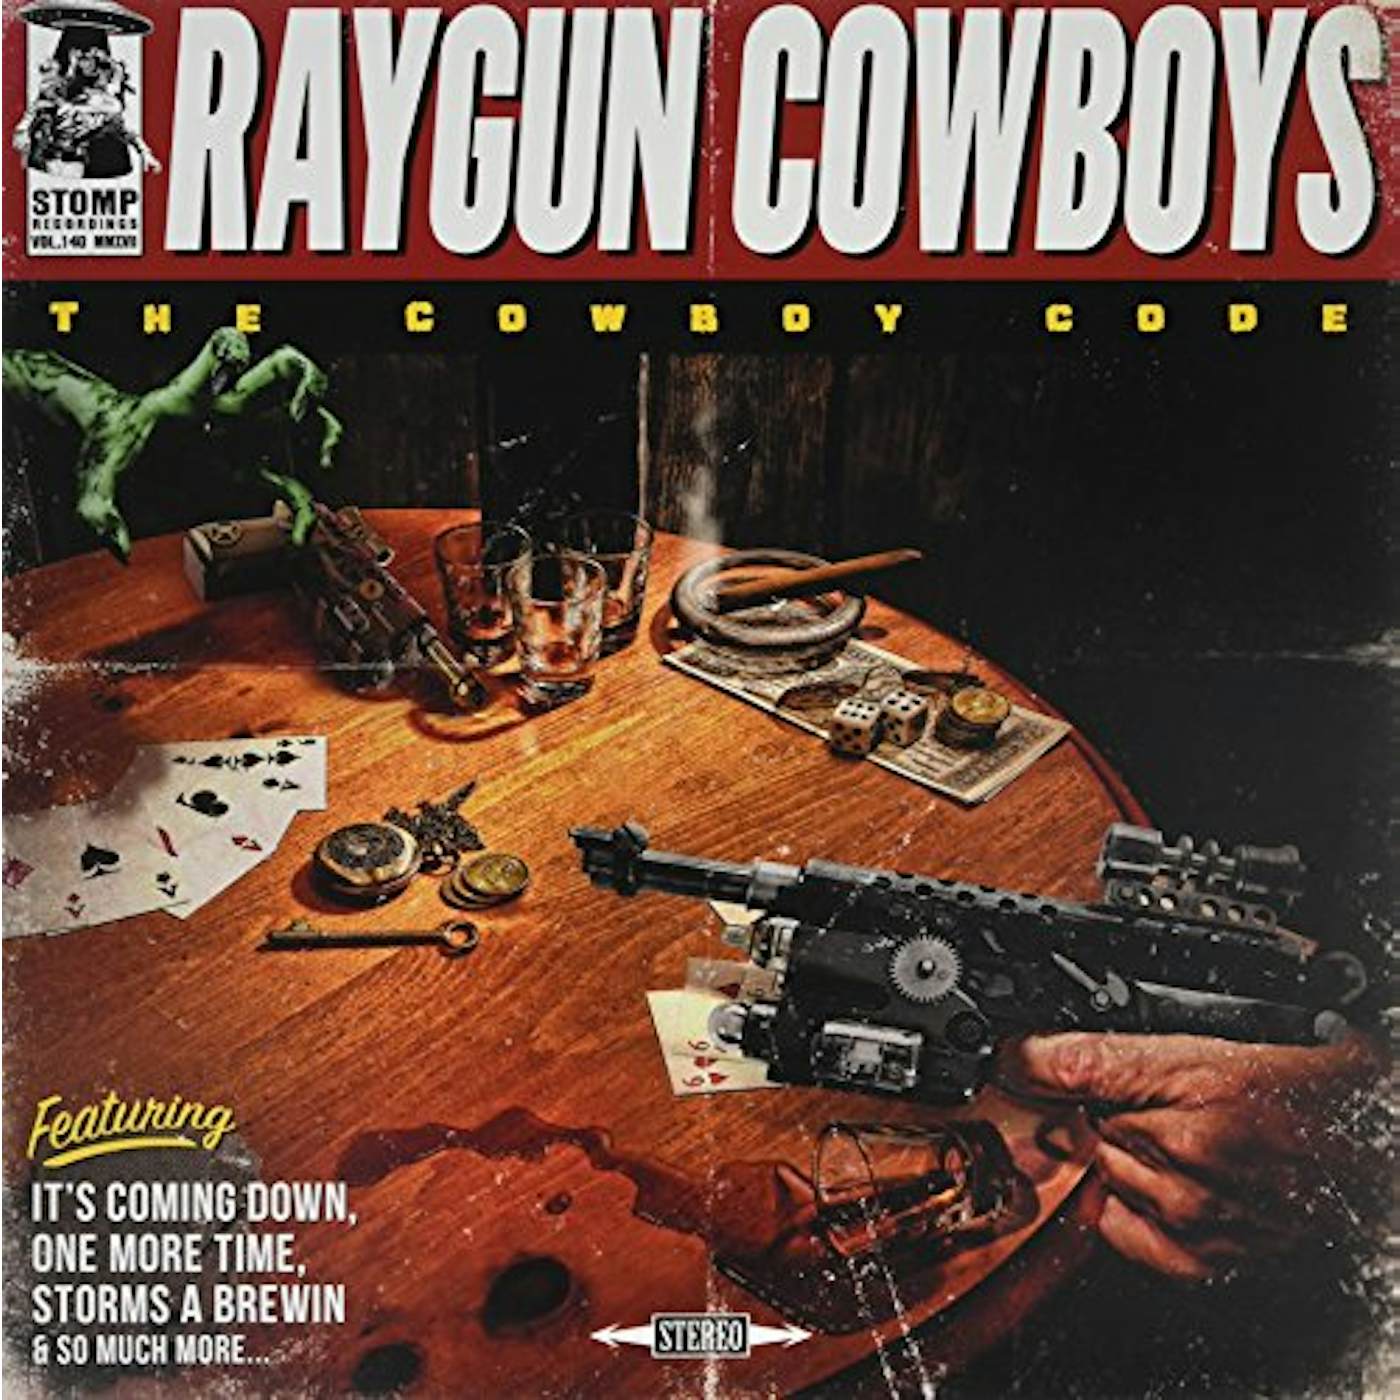 Raygun Cowboys COWBOY CODE Vinyl Record